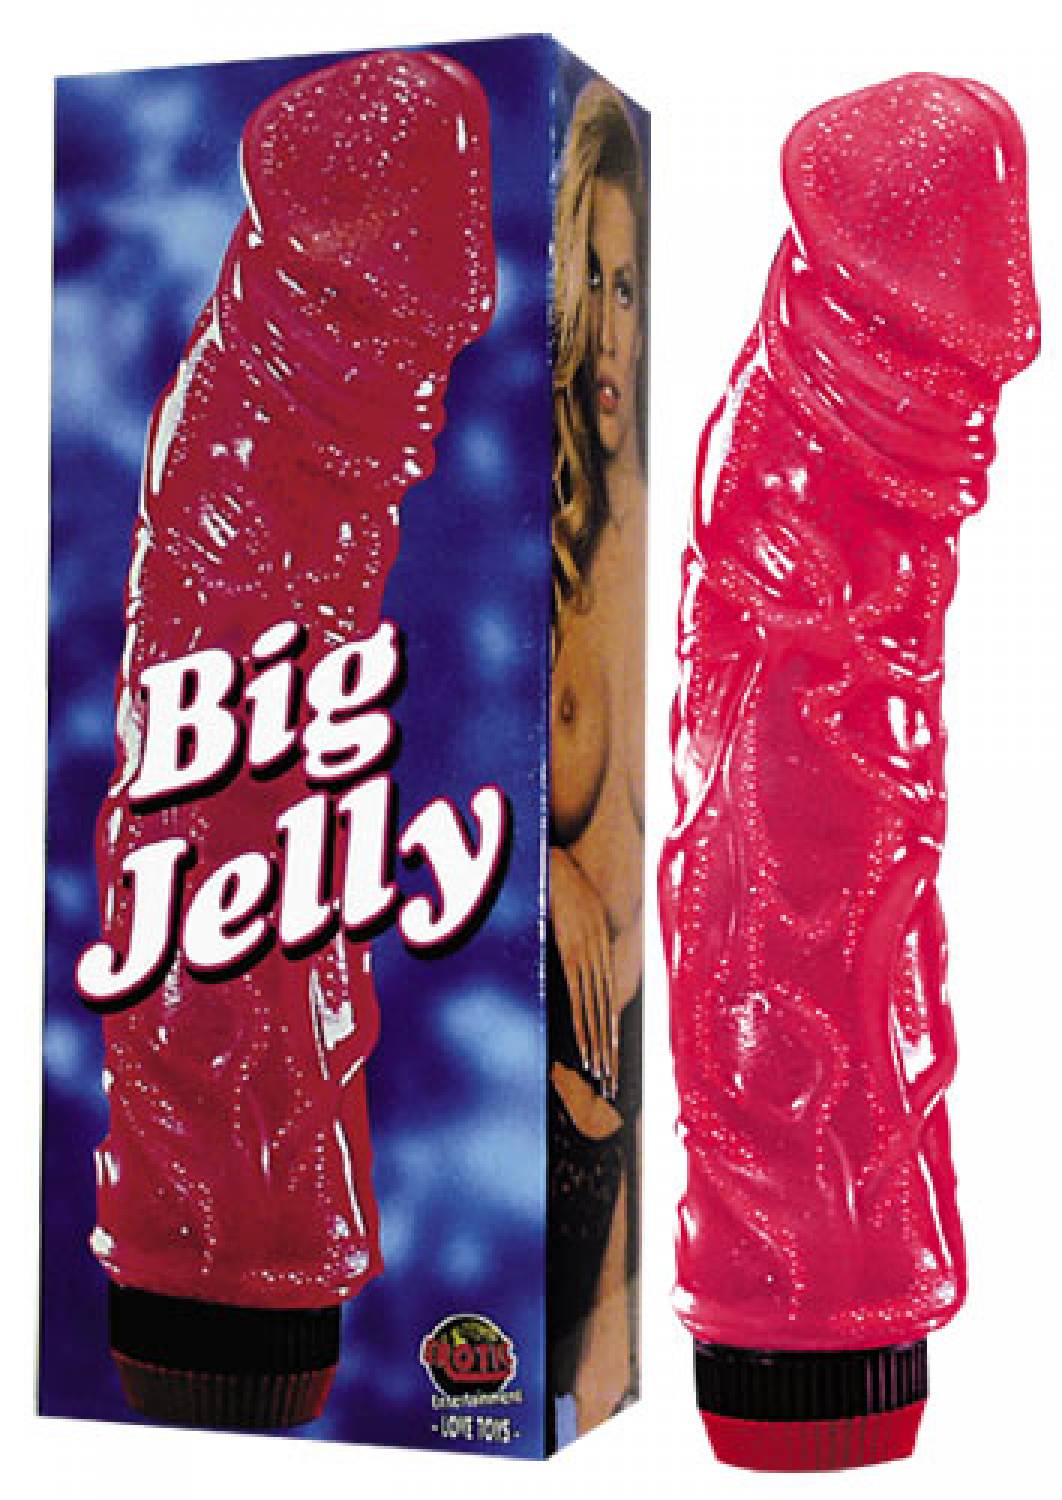 Erotic Entertainment Love Toys Big Jelly vibrator